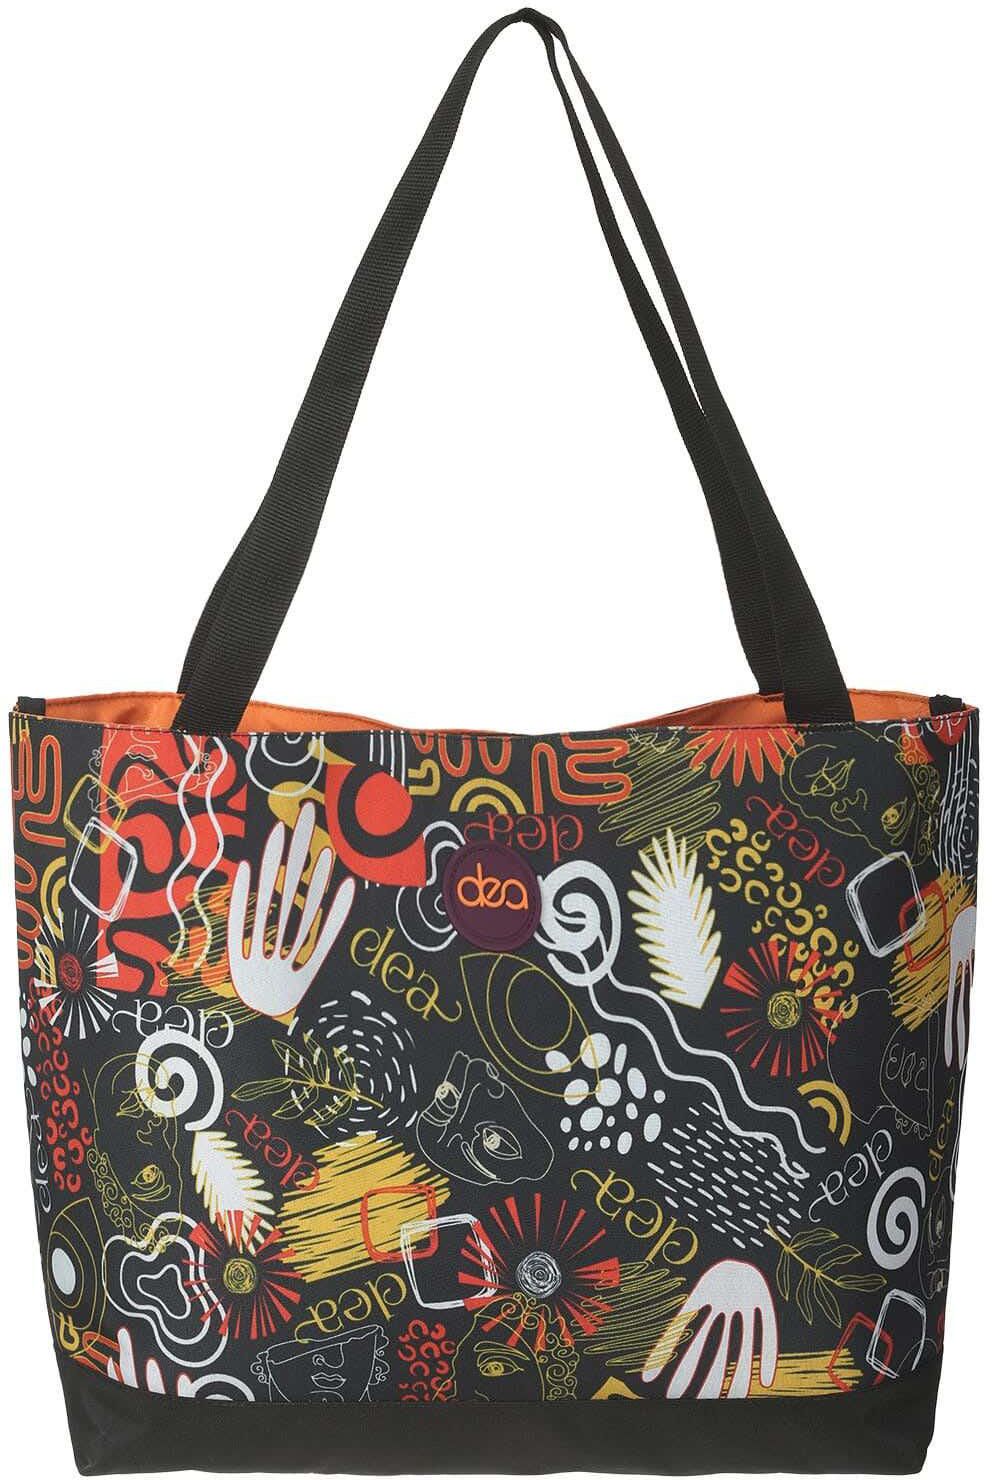 Get Dea Tropic Polyester Handbag for Women, 45×30 cm - Multicolor with best offers | Raneen.com